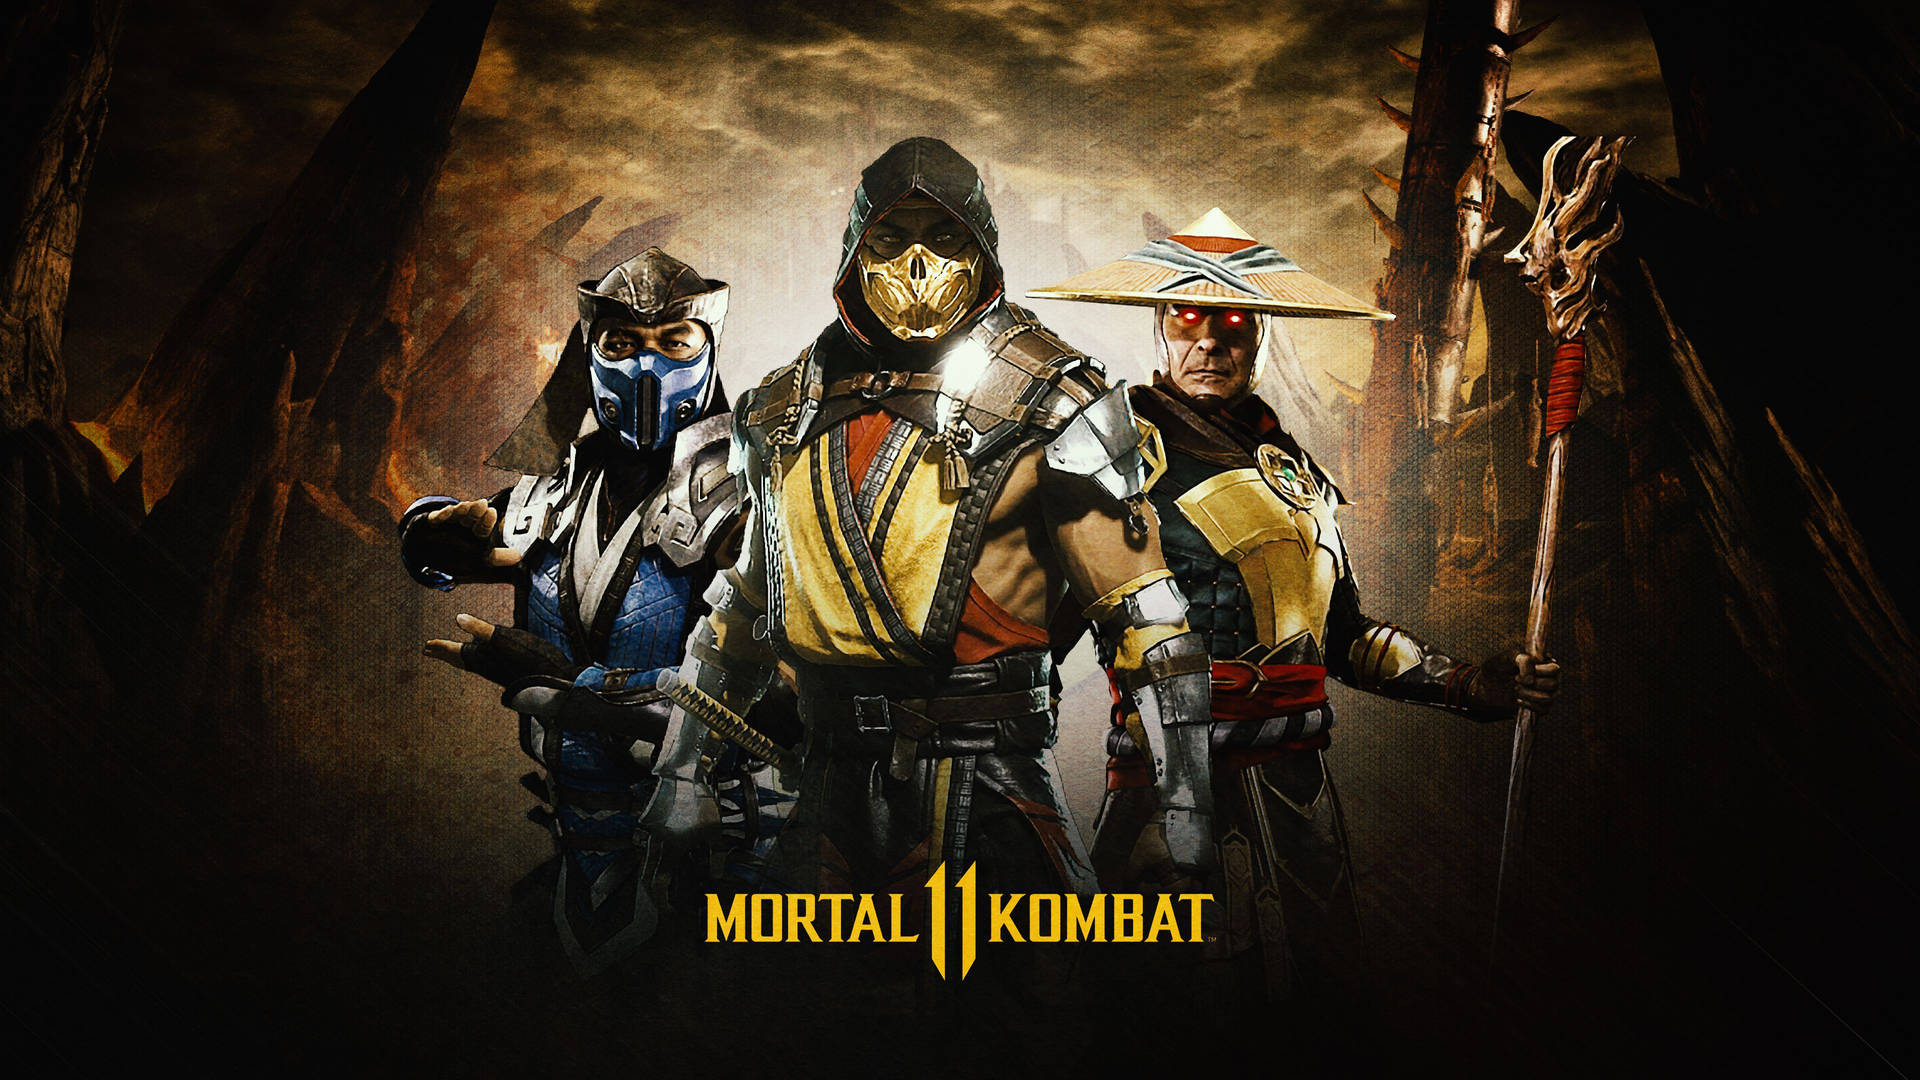 Free Mortal Kombat 11 Wallpaper Downloads, [100+] Mortal Kombat 11  Wallpapers for FREE 